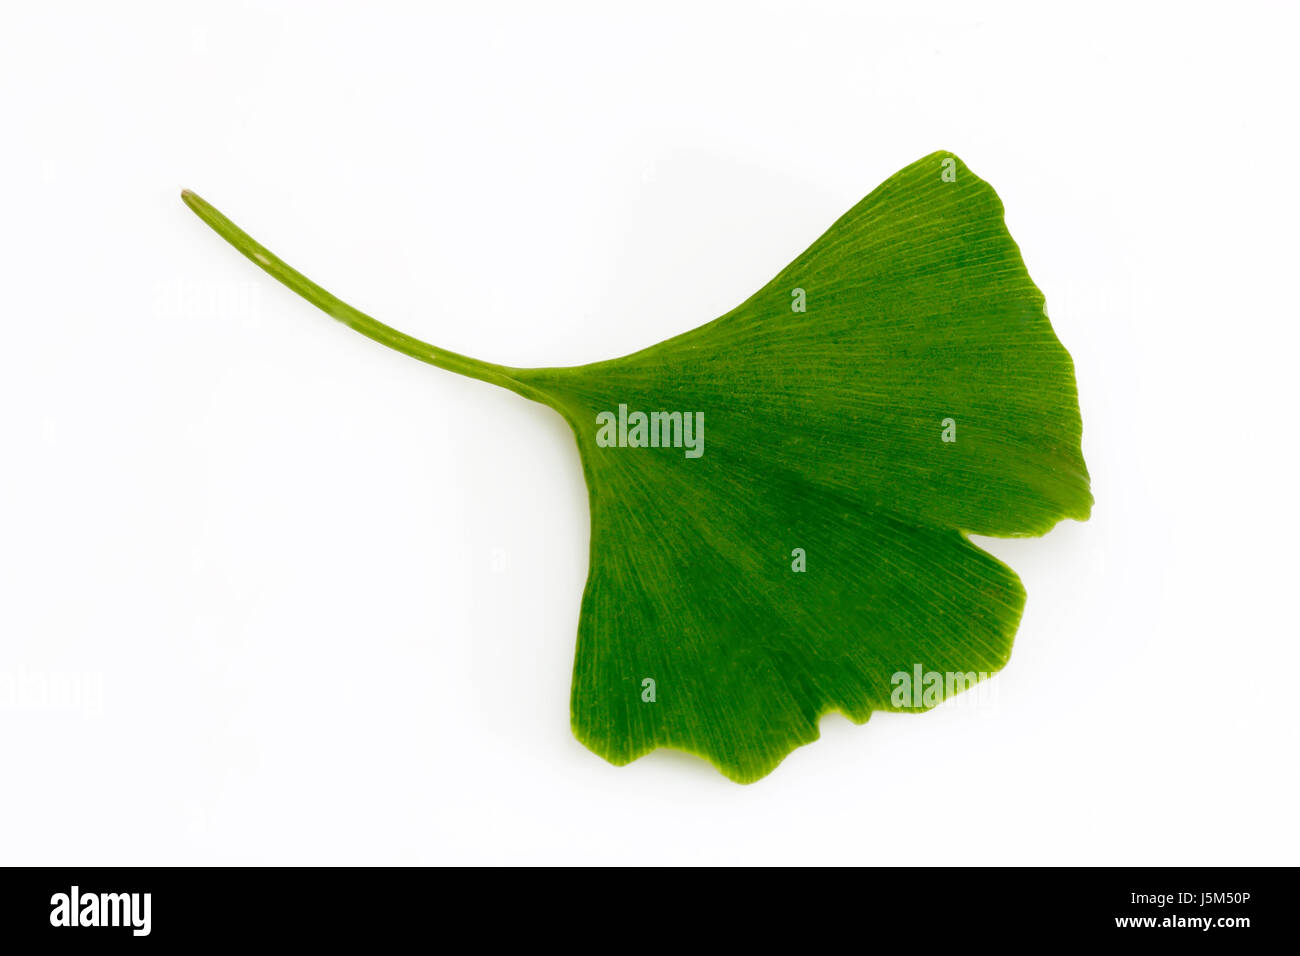 leaf green medicinal plant myth leaves foliage gingko gingkoblatt bilboa Stock Photo